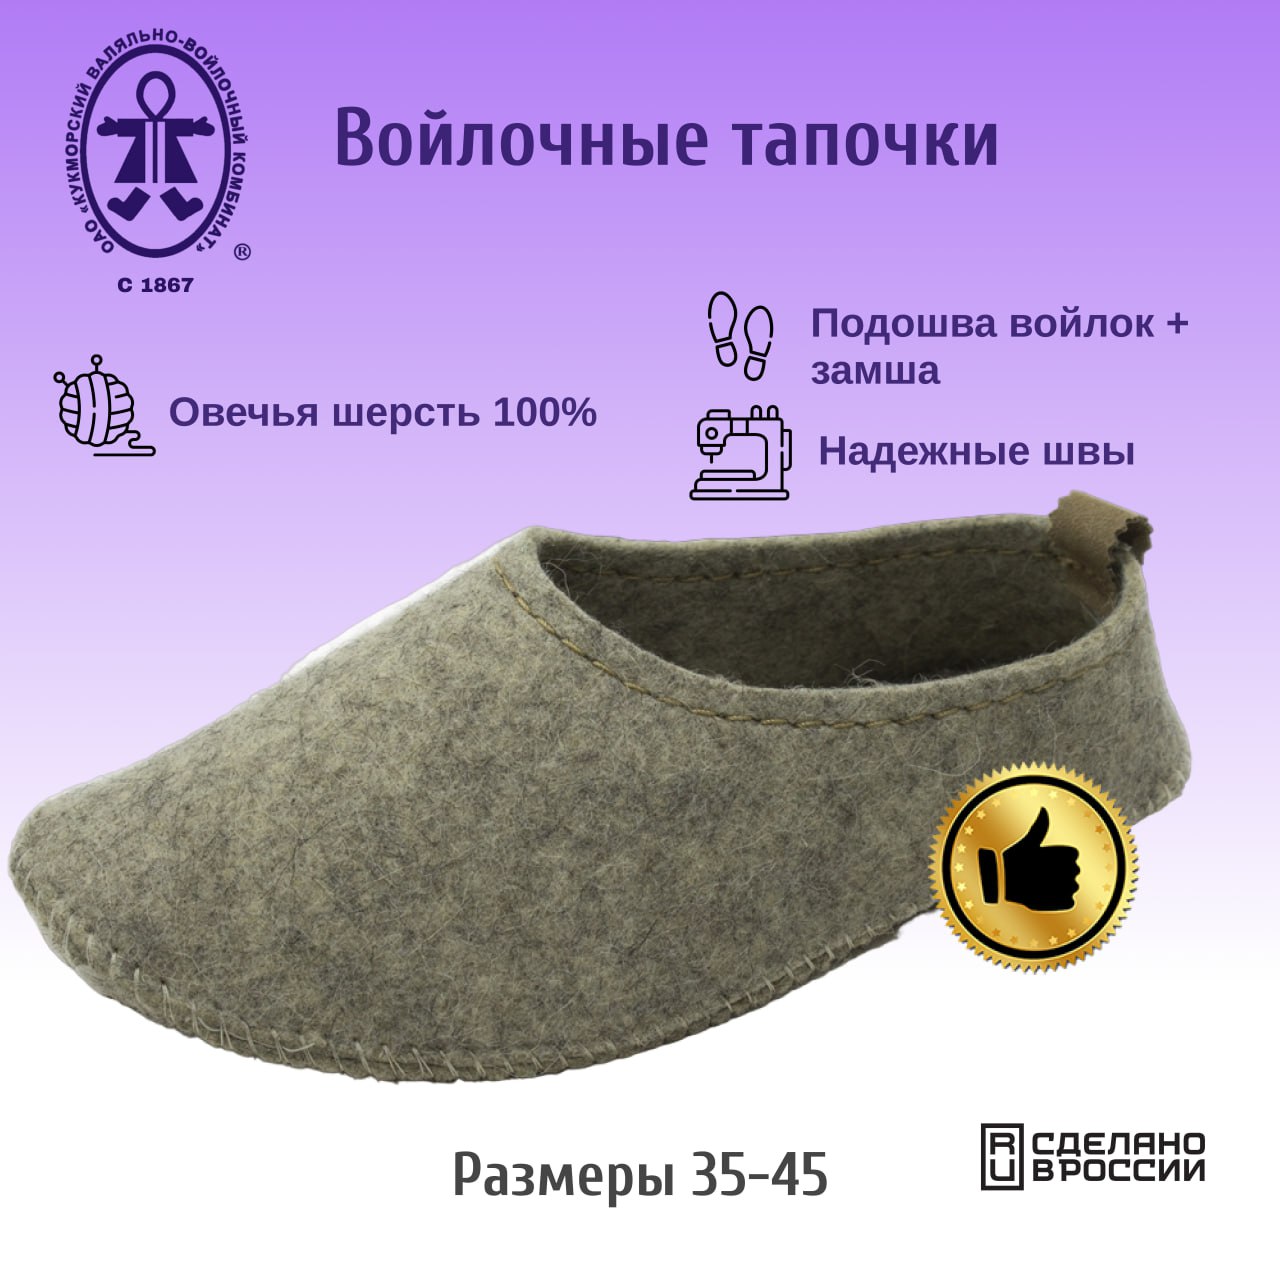 Тапочки Кукморские валенки Т-34-1022 серый, 37